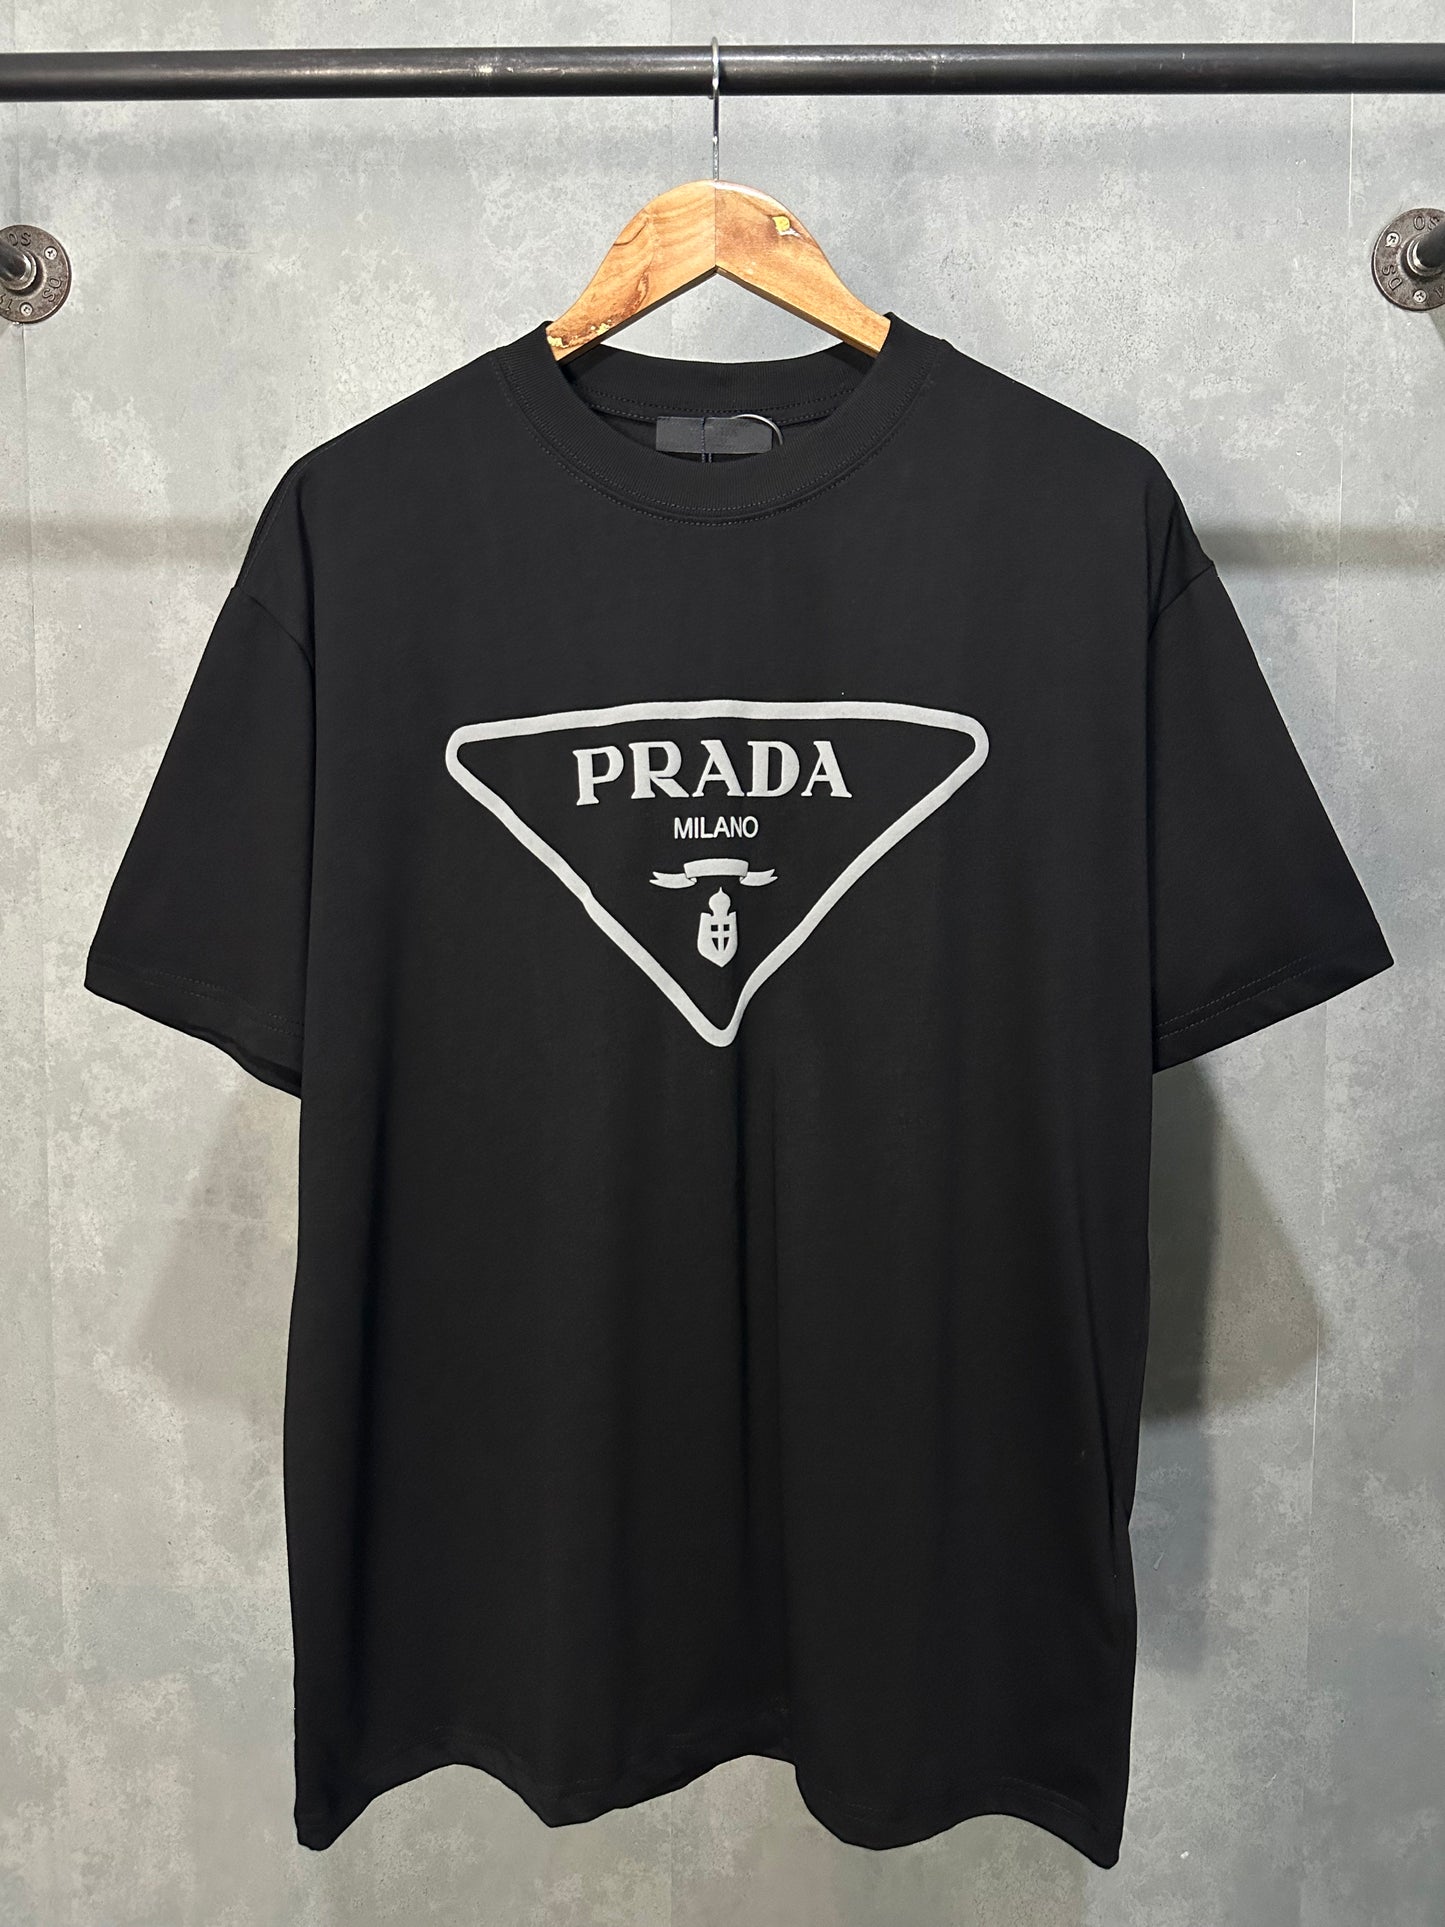 Prada Milano T-Shirt (Black)